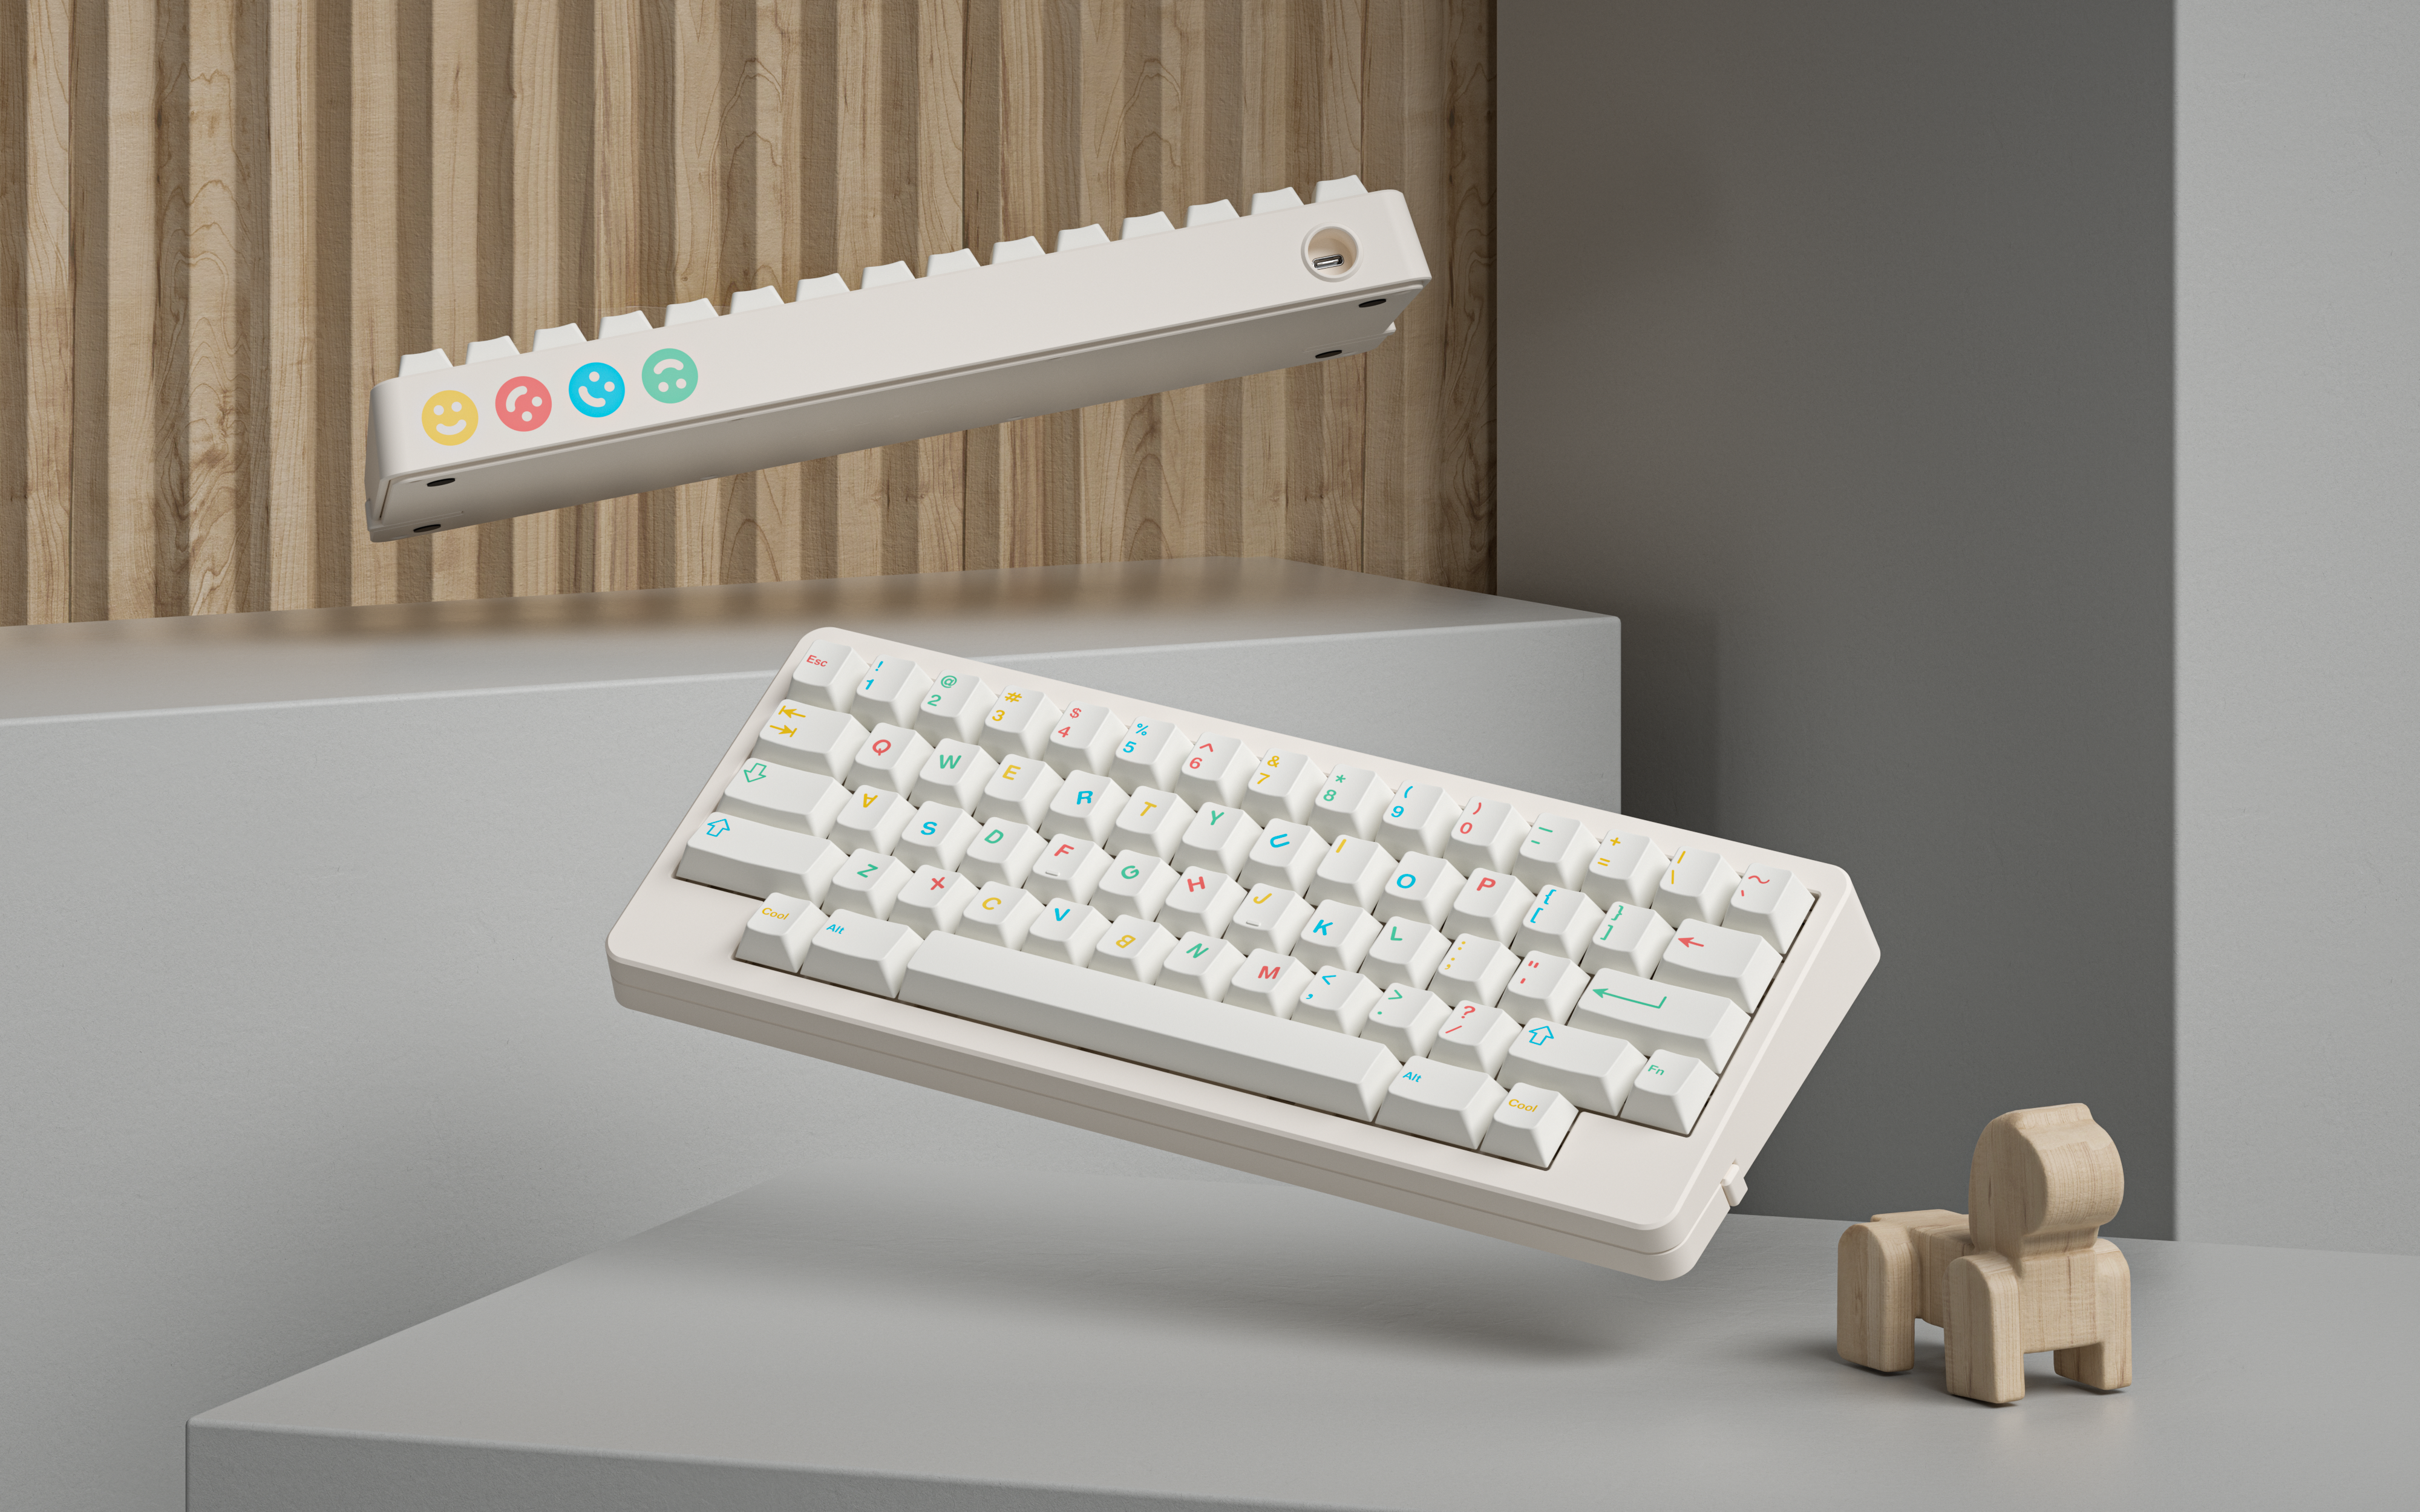 D60Lite cool kids keyboard kbdfans